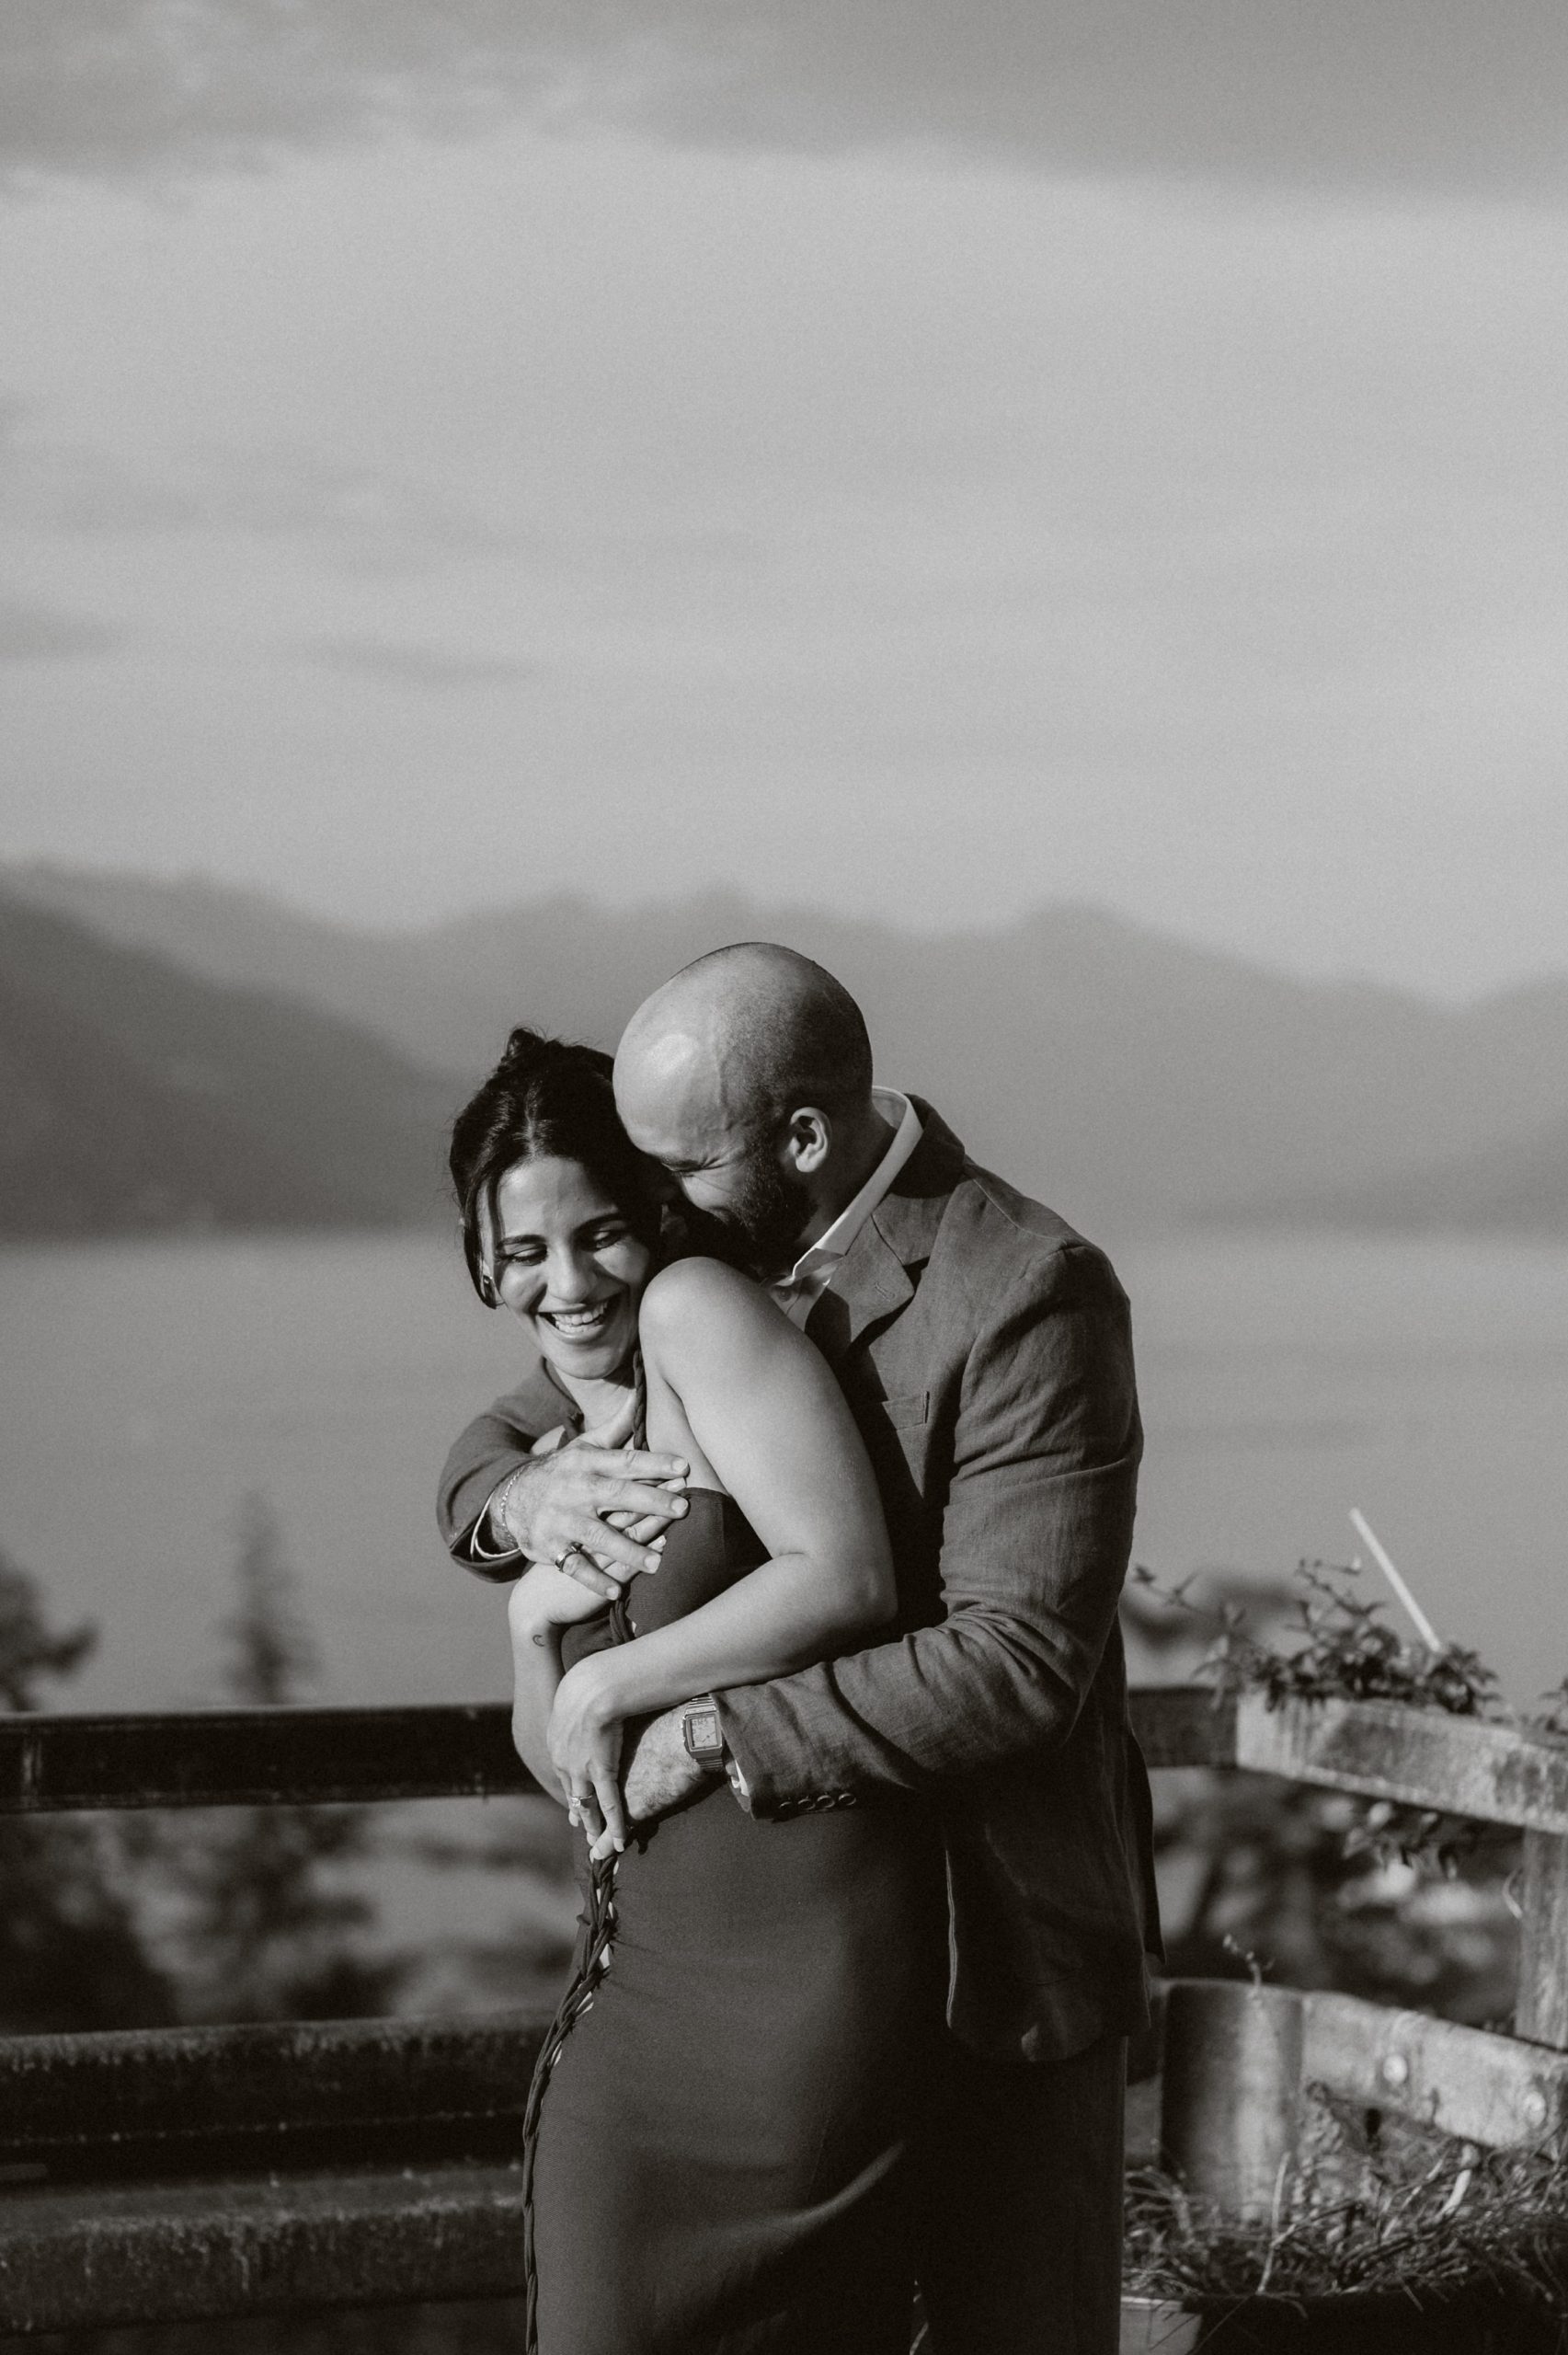 Lake Como proposal photoshoot